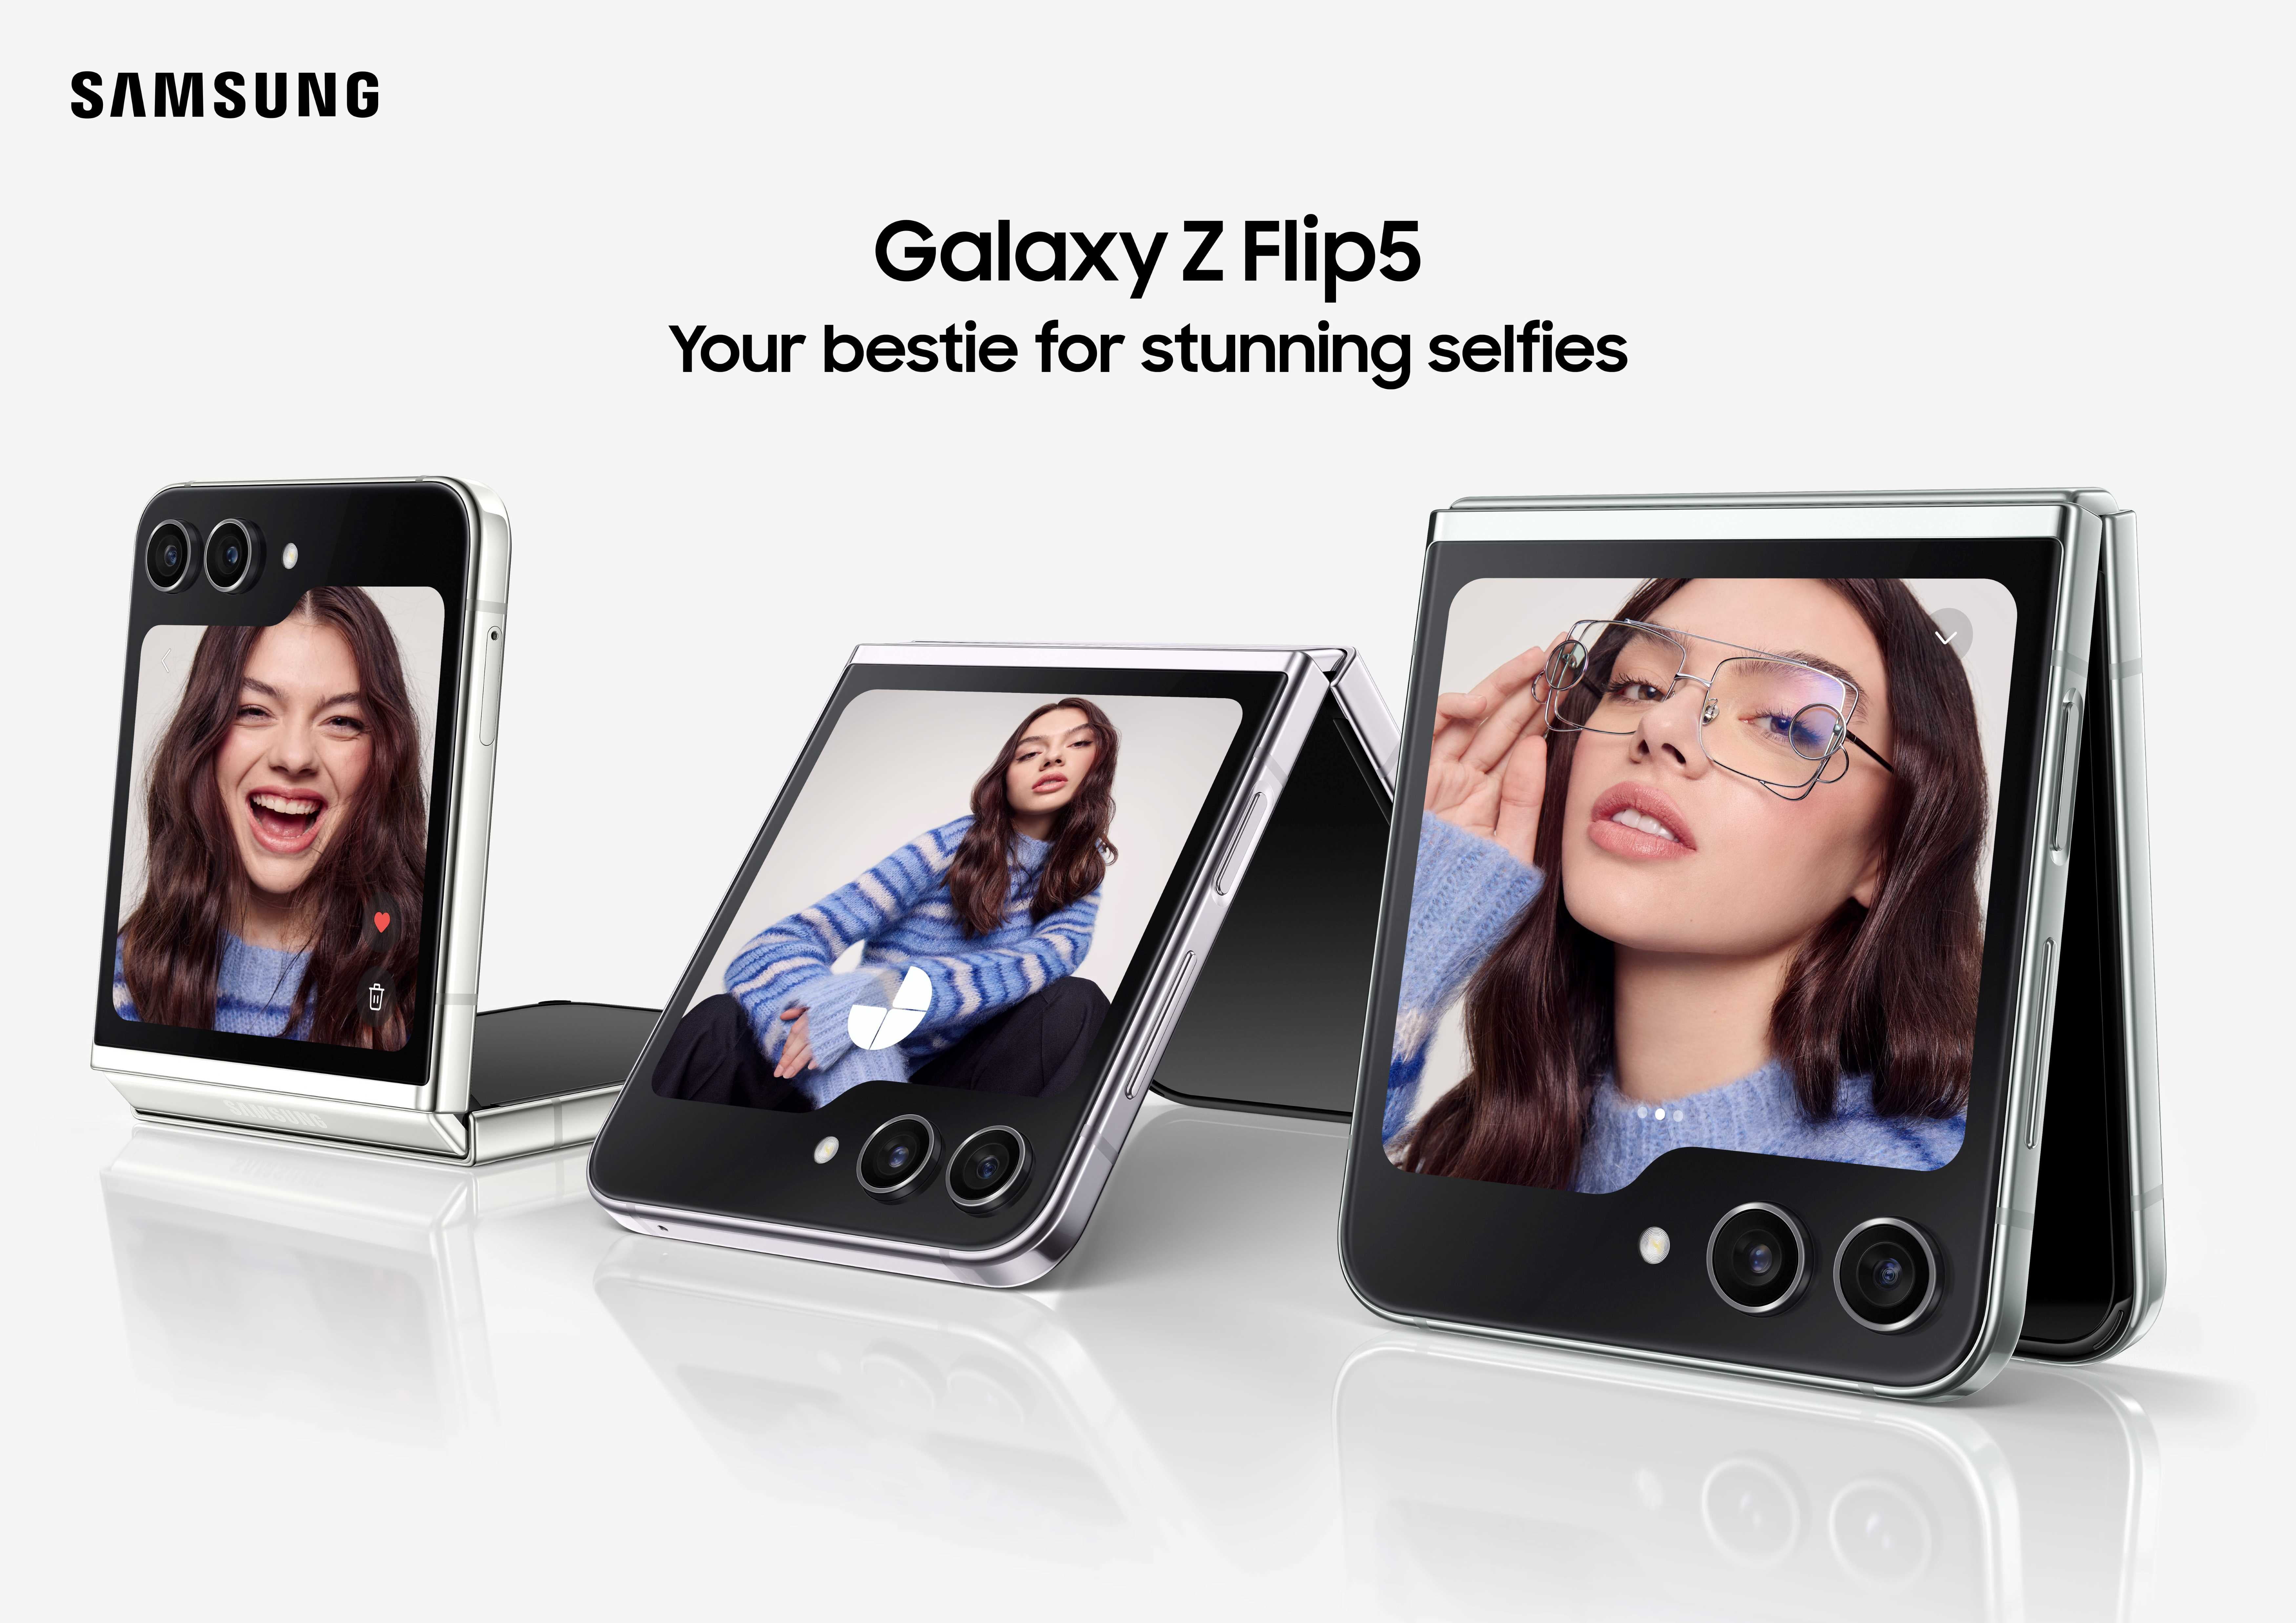  SAMSUNG Galaxy Z Flip 5 Cell Phone, Unlocked Android